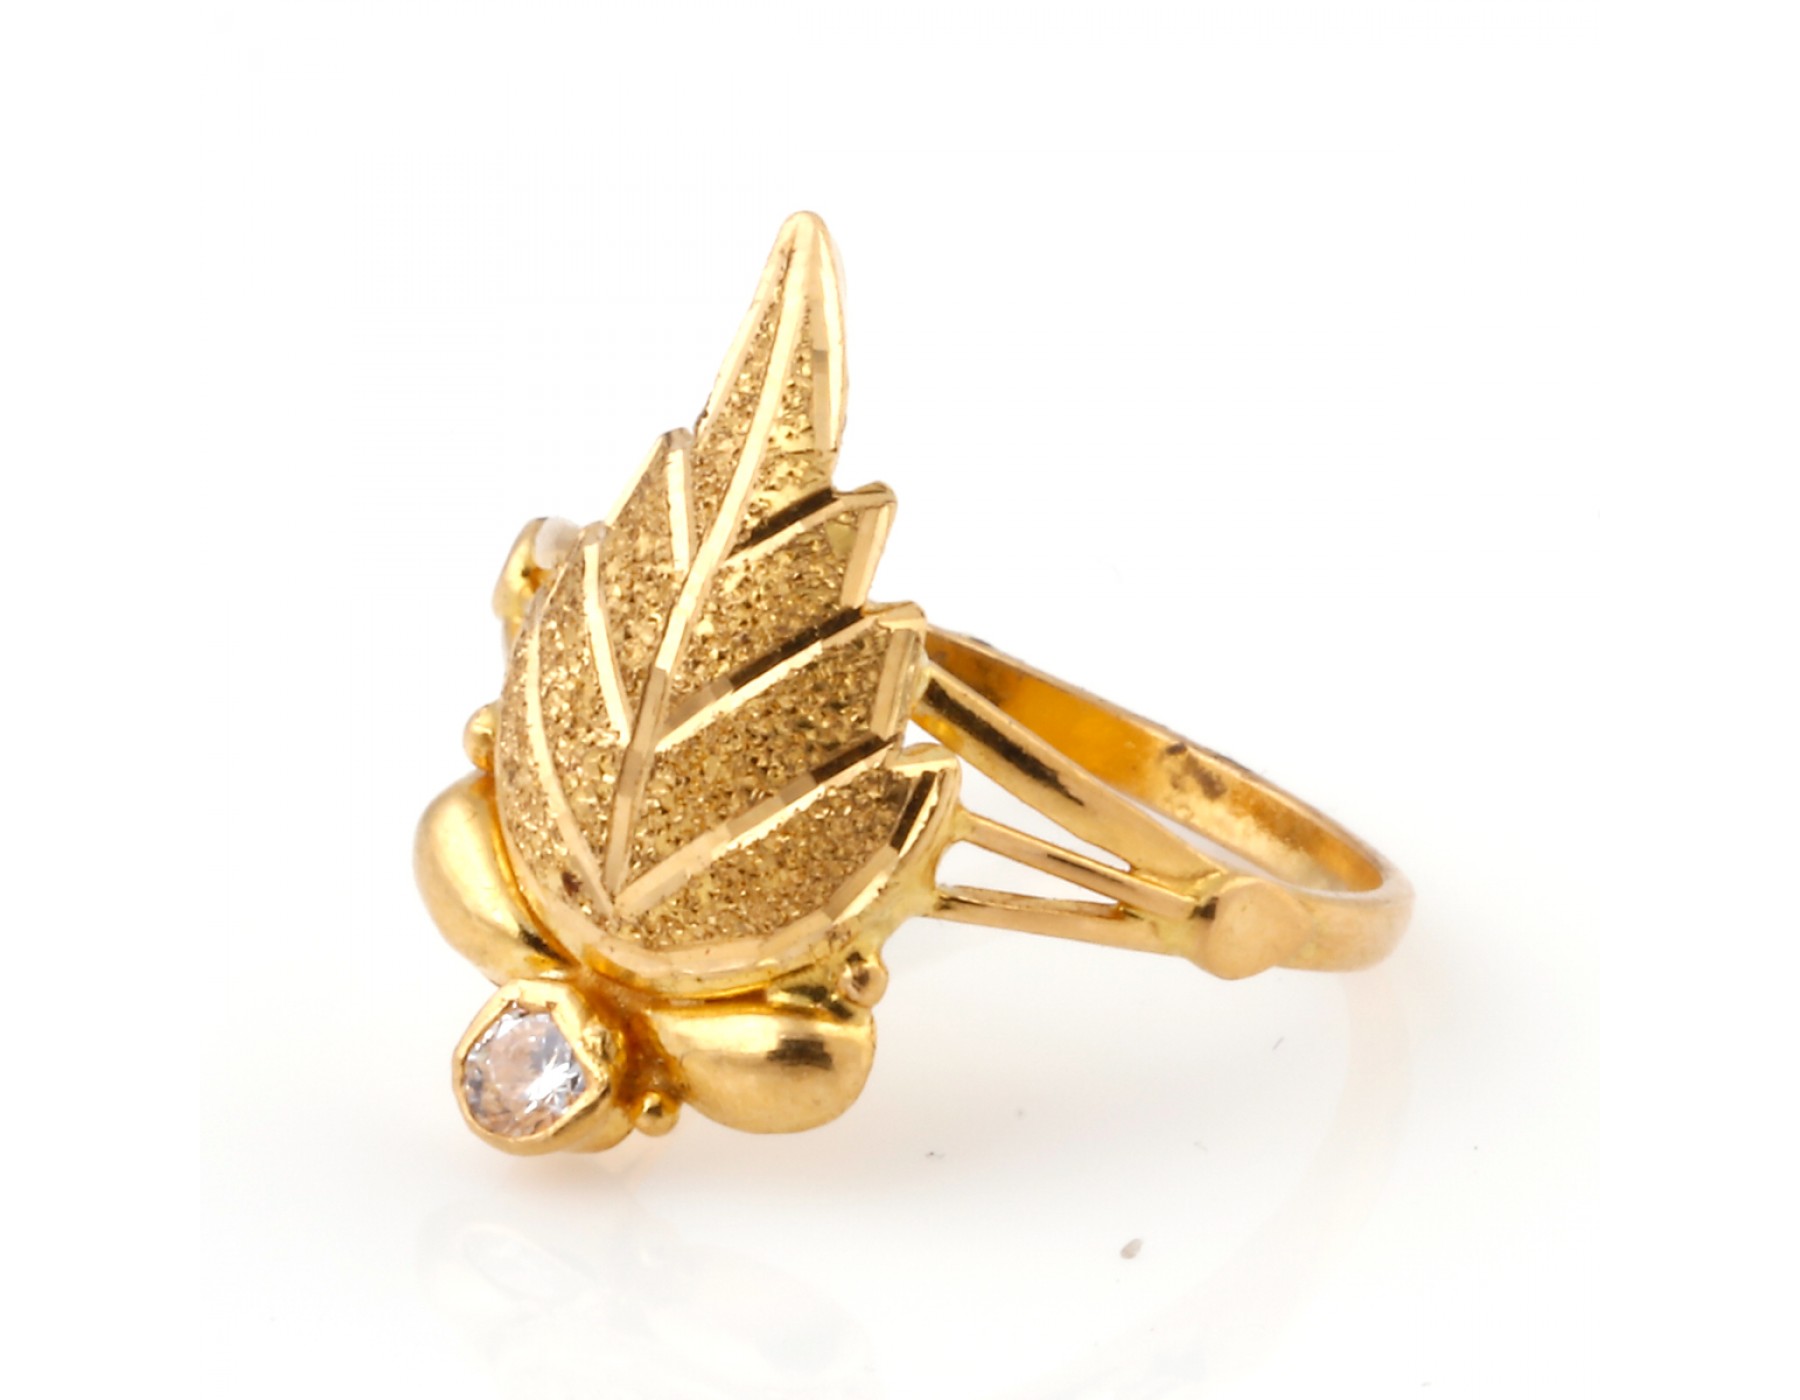 Triple Leaf Ring - Brass Rings, New Arrivals, Rings - Baizaar Jewelry